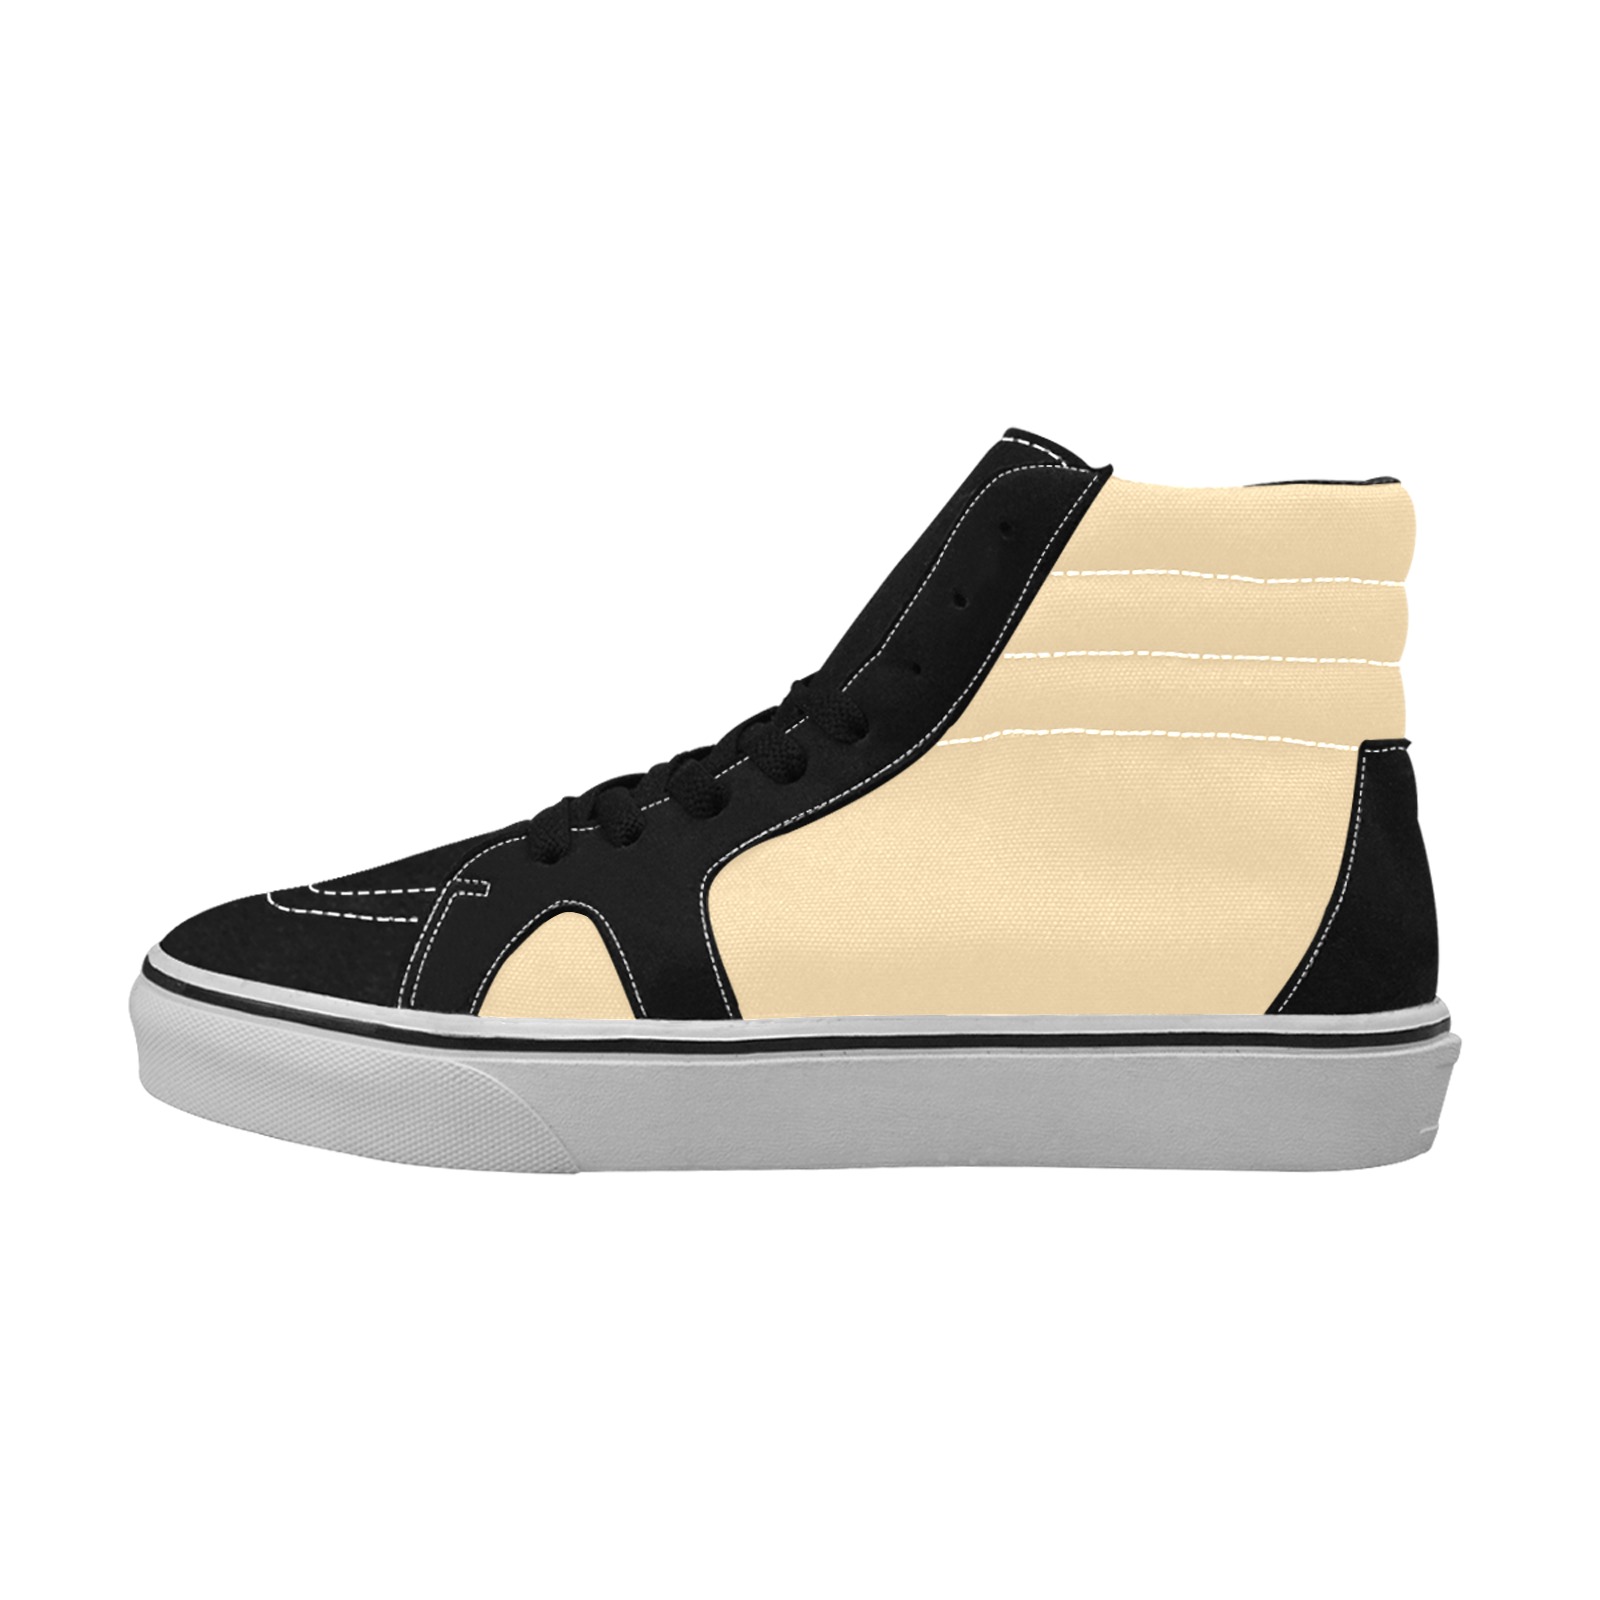 color moccasin Men's High Top Skateboarding Shoes (Model E001-1)